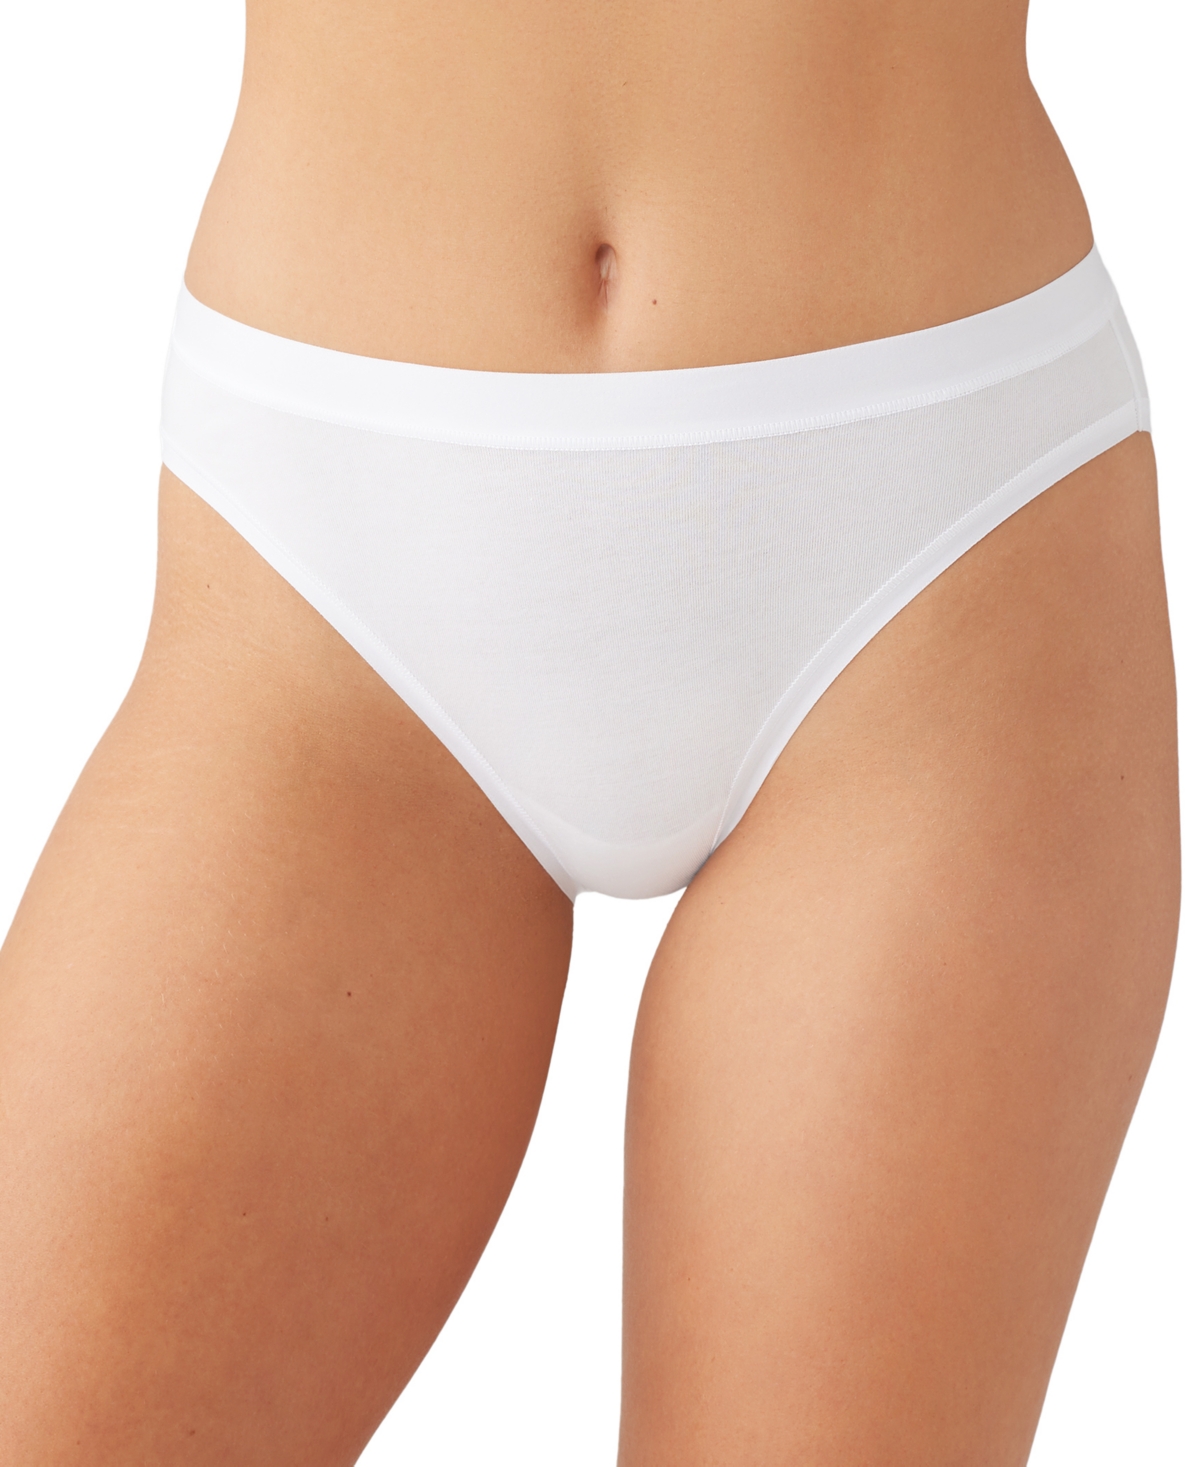 Shop Wacoal Women's Understated Cotton Bikini Underwear 870362 In White